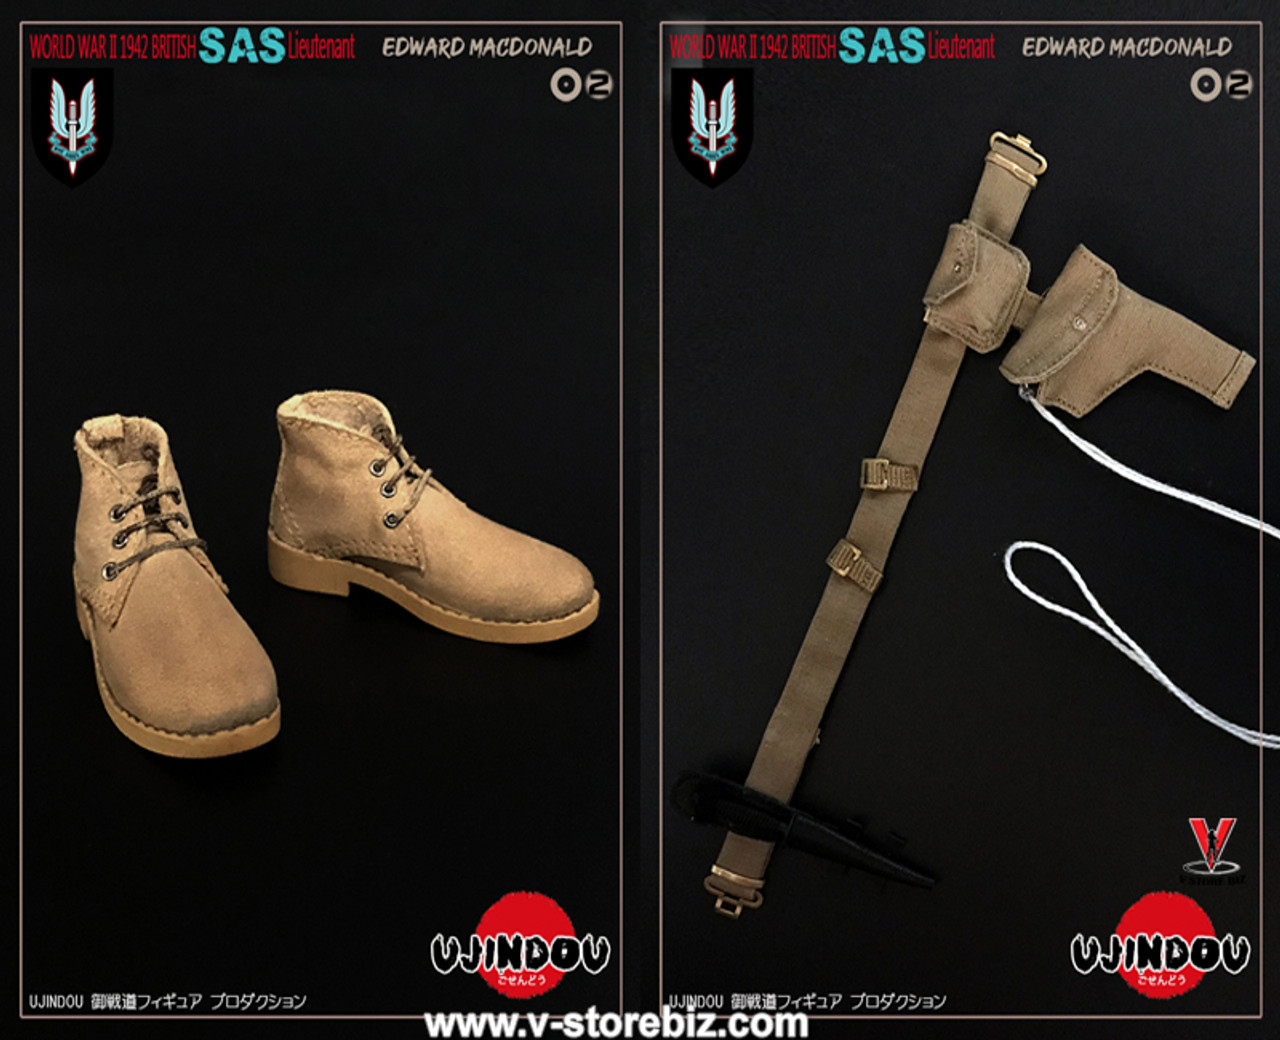 UJINDOU Action Figures - 1/6 Scale for Feet Edward Macdonald SAS Boots